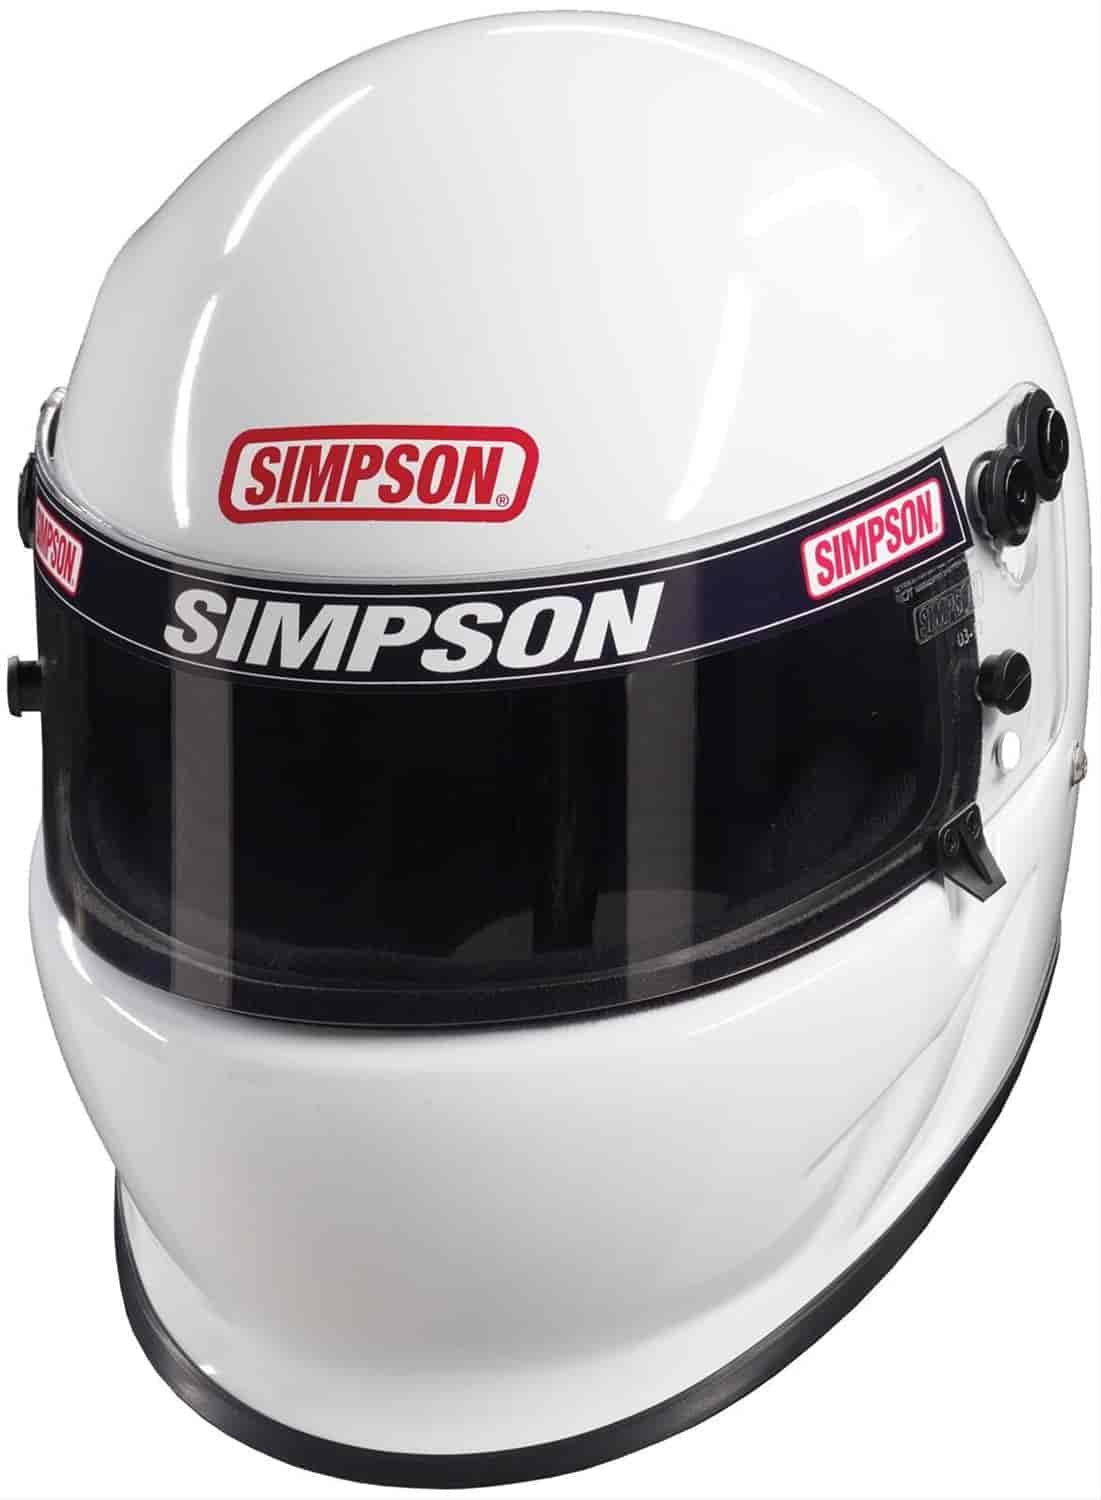 Vudo EV1 Helmet SA2015 Certified